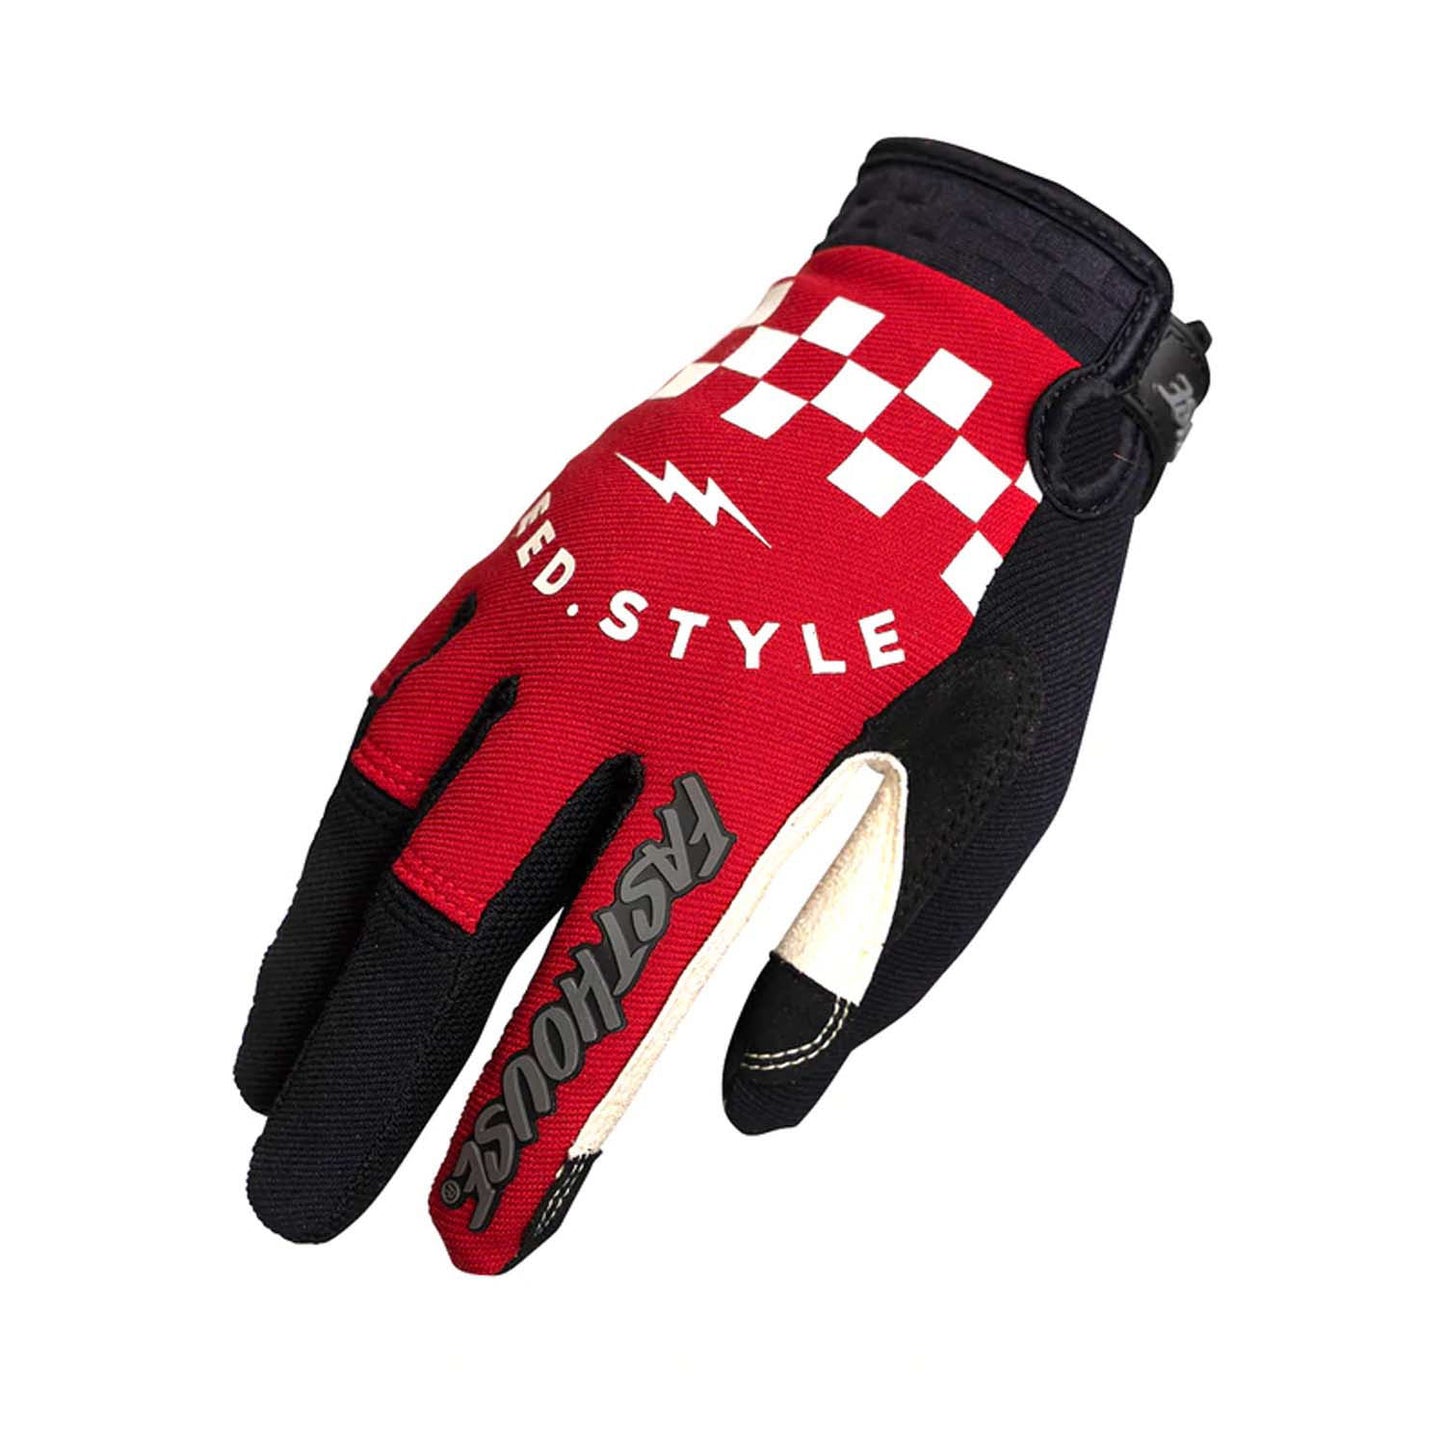 Fasthouse Speed Style Glove - Sale Rowen - Red Bike Gloves